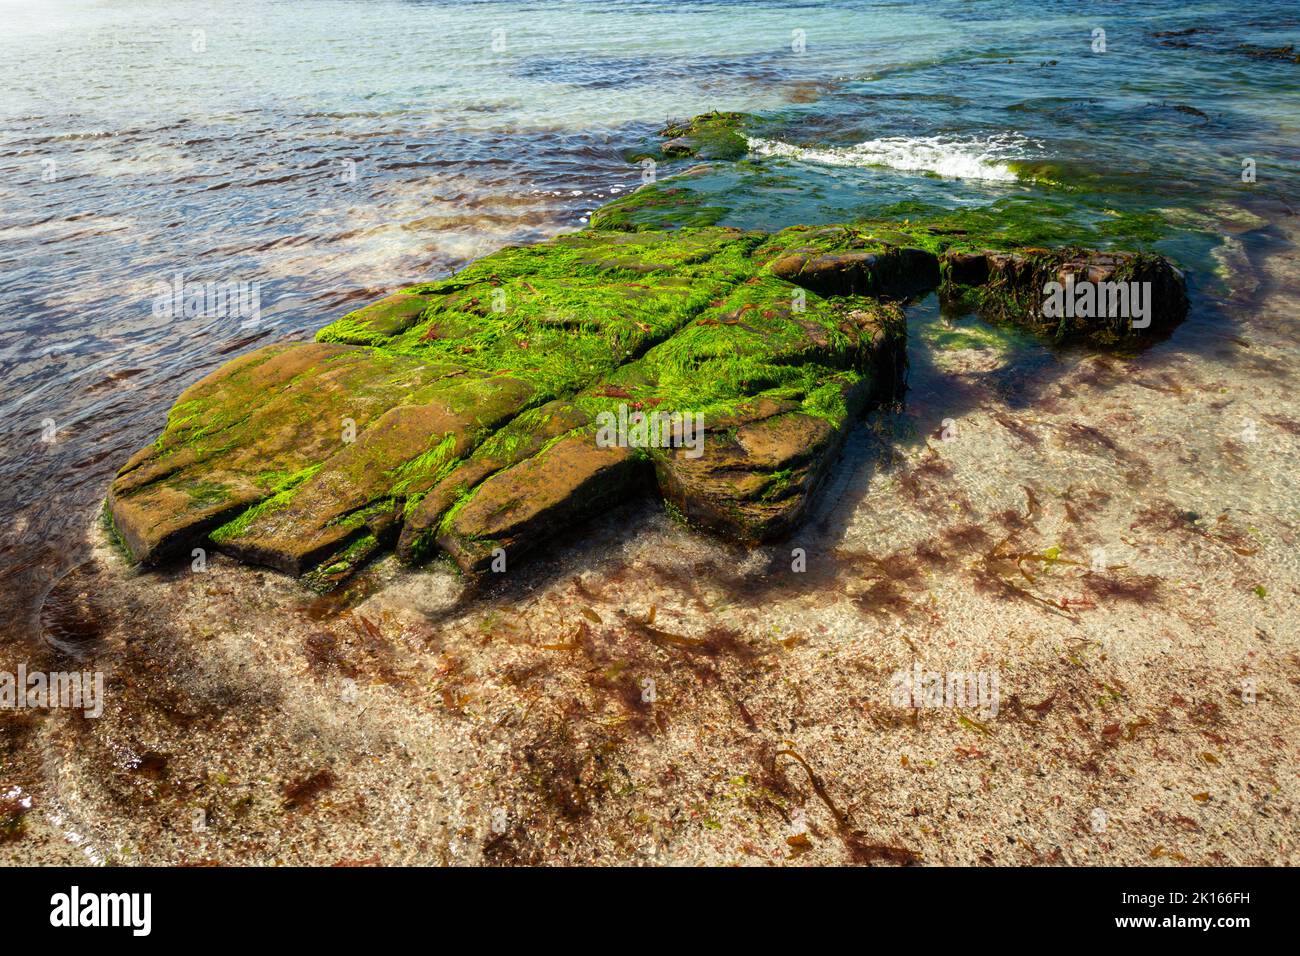 Exposed rock with seaweed growing on it, Orkney coast, UK Stock Photo